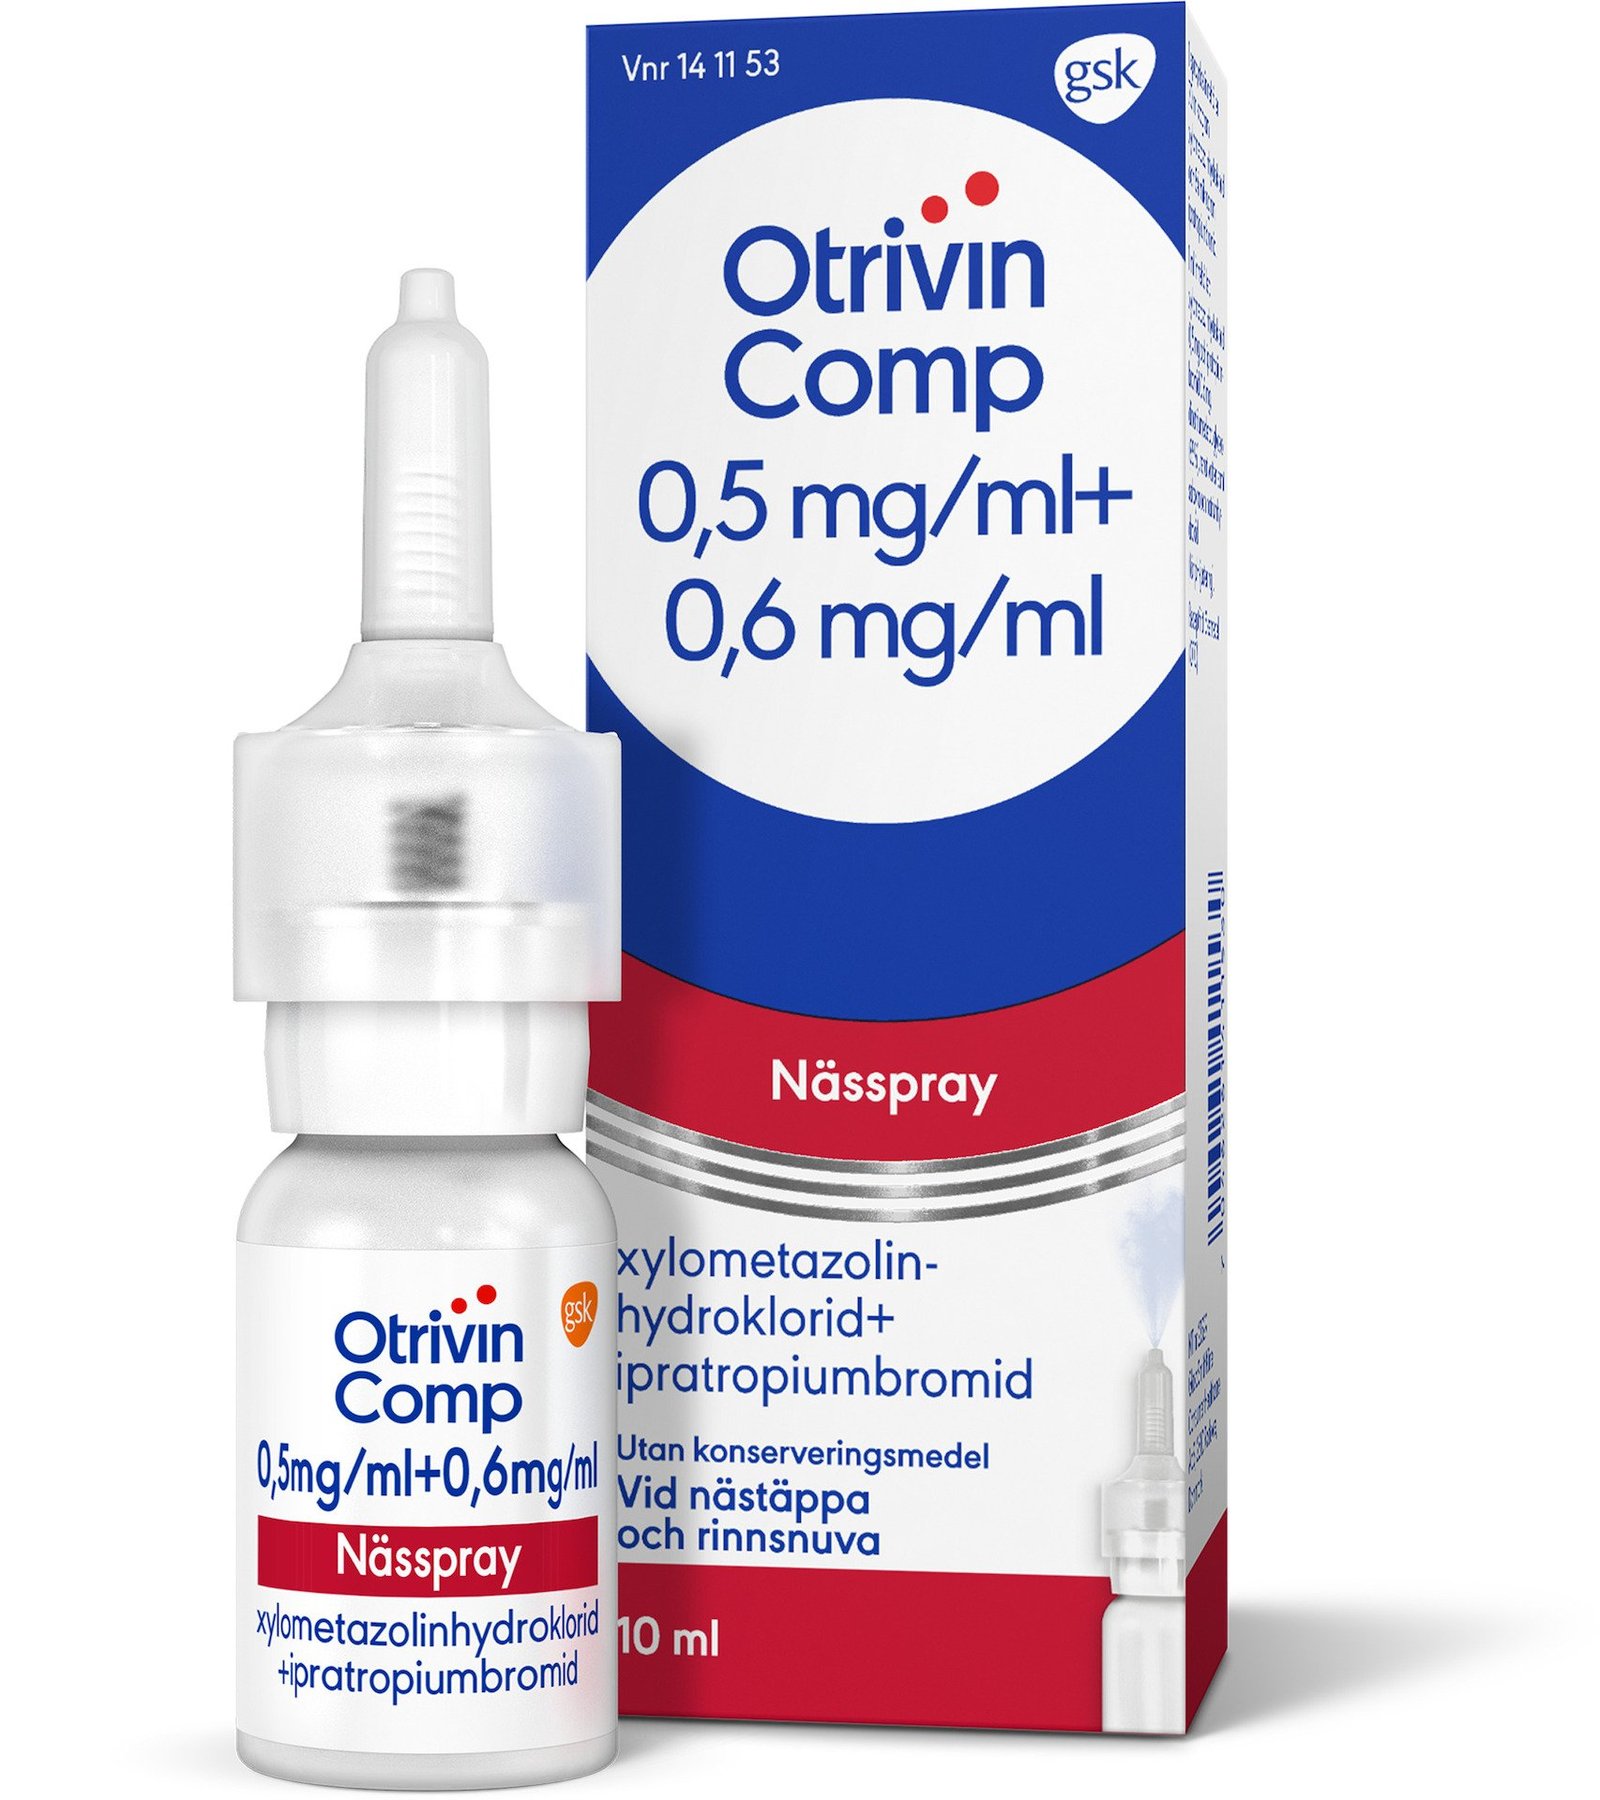 Otrivin Comp Nässpray lösning 0,5 mg/ml + 0,6 mg/ml 10 ml